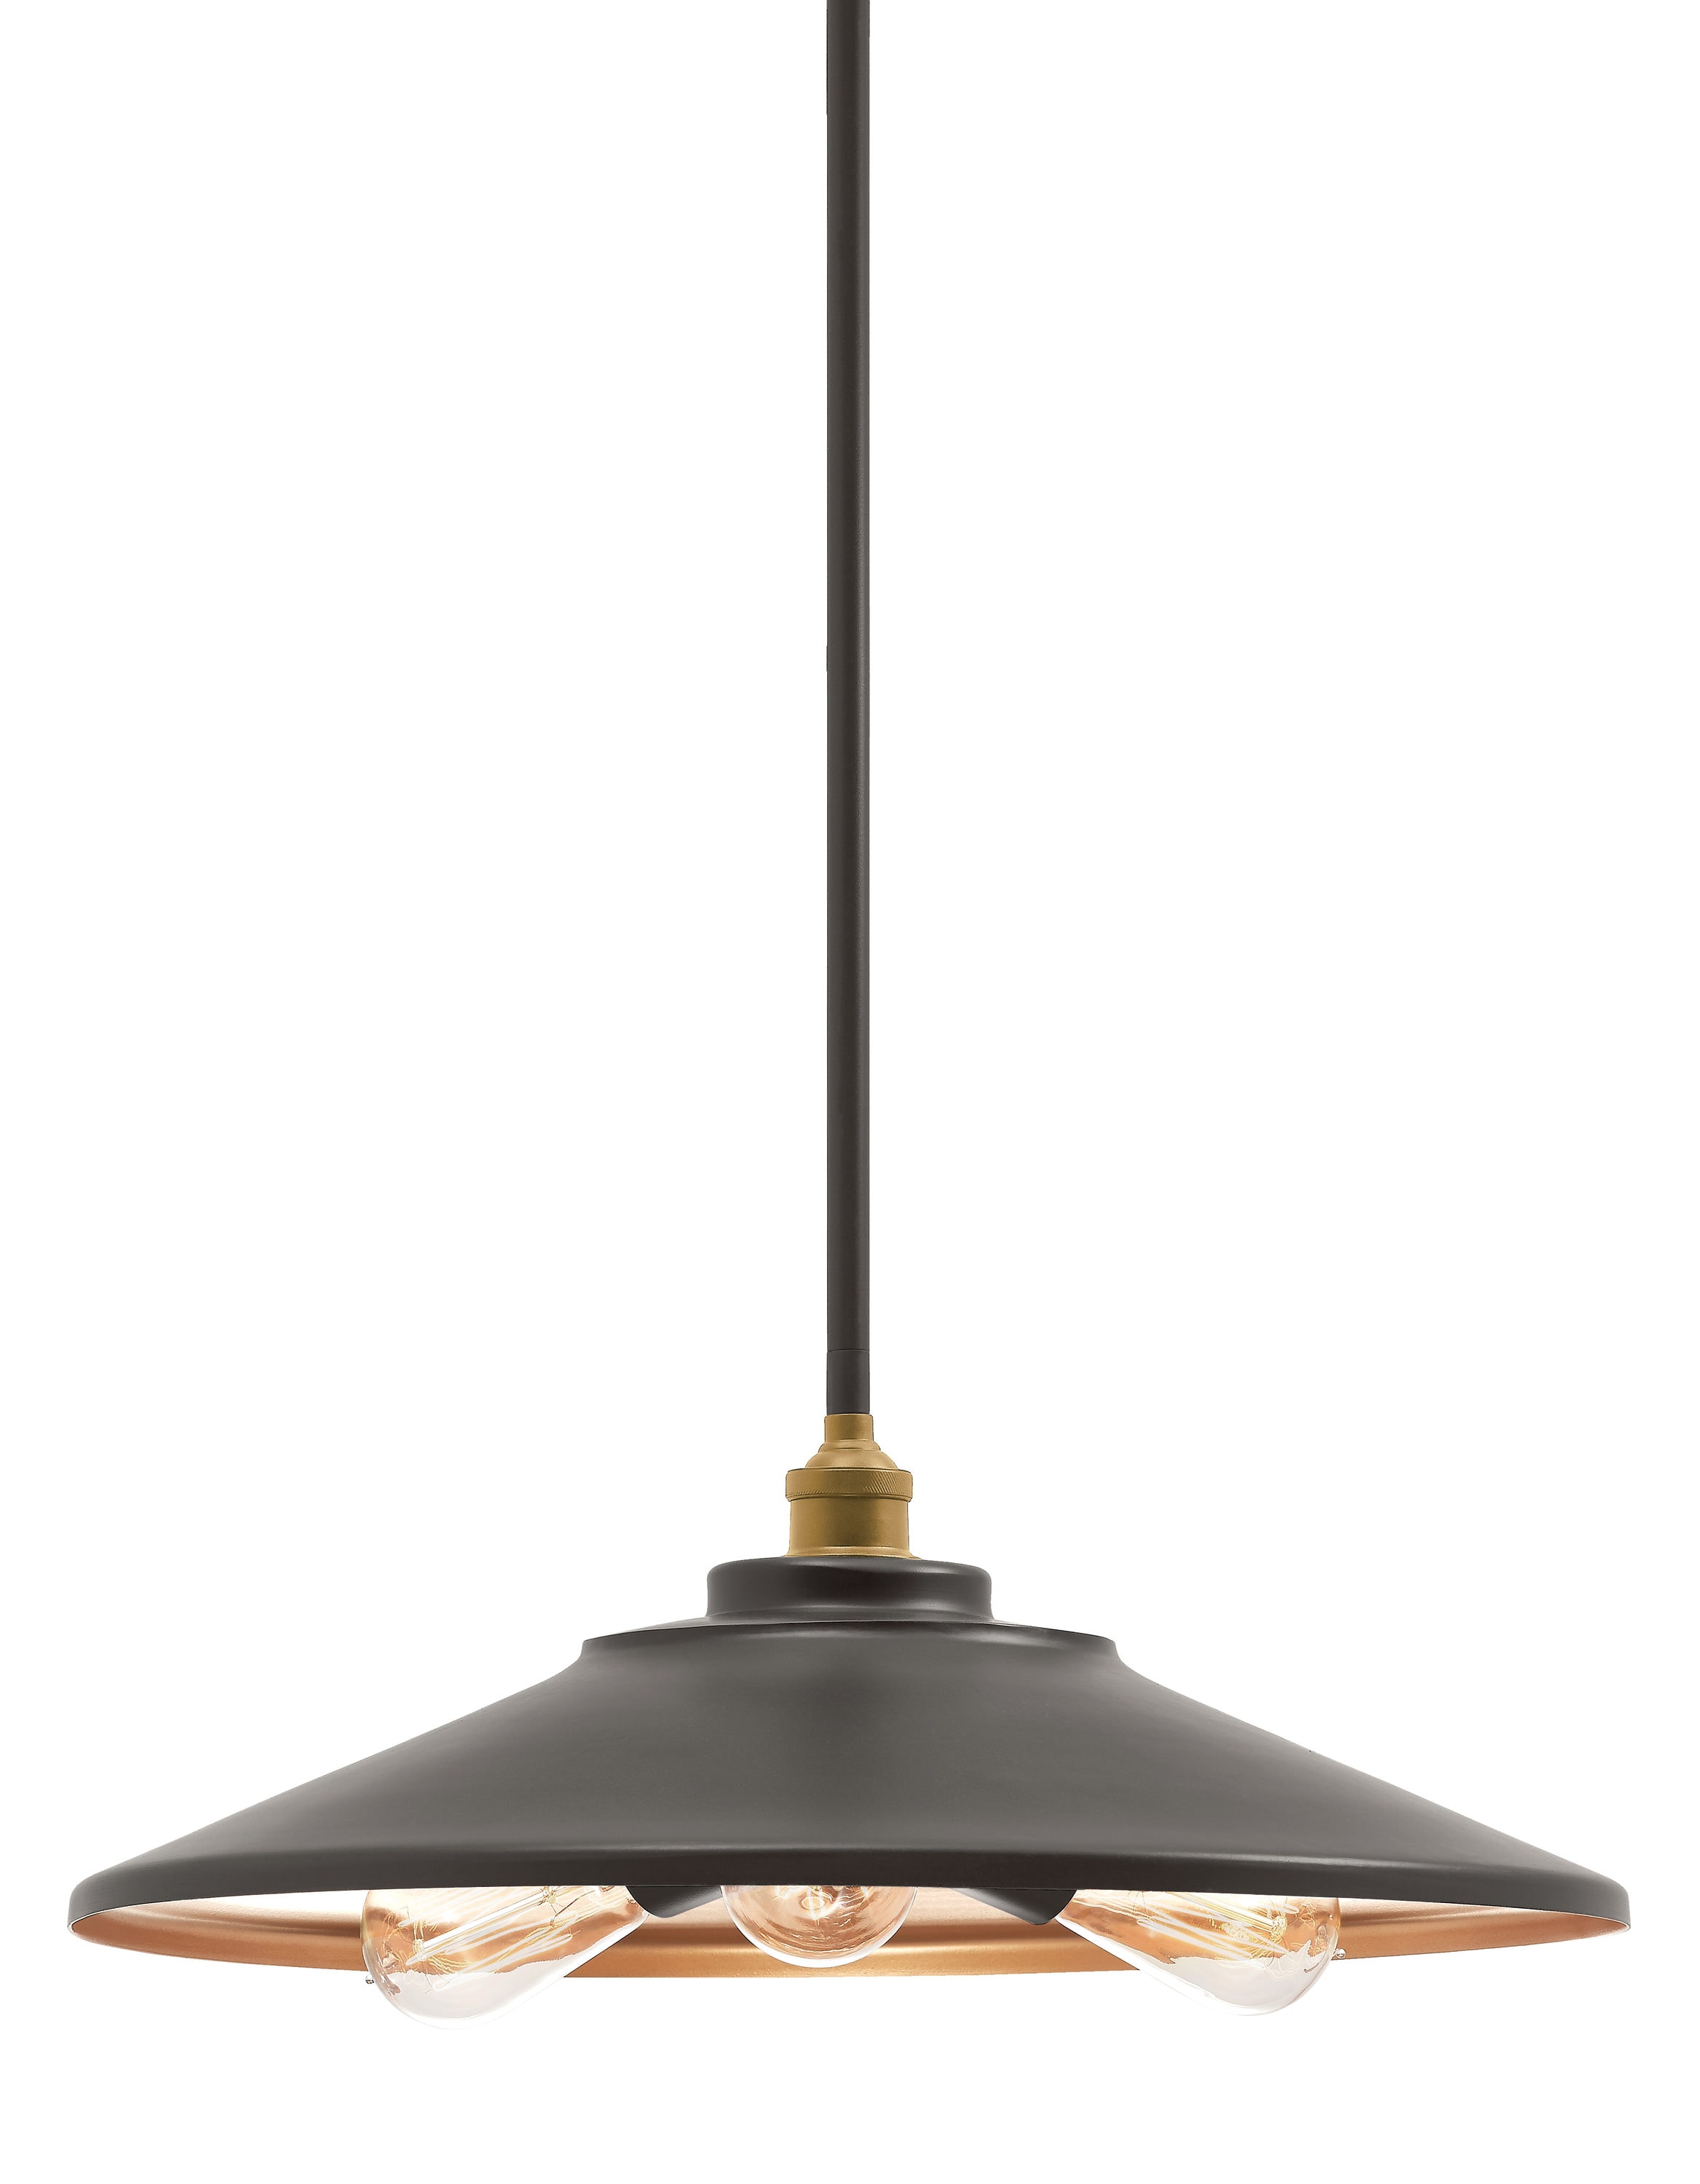 Kichler Covington 3-Light Olde Bronze Industrial Cone Hanging Pendant Light  at